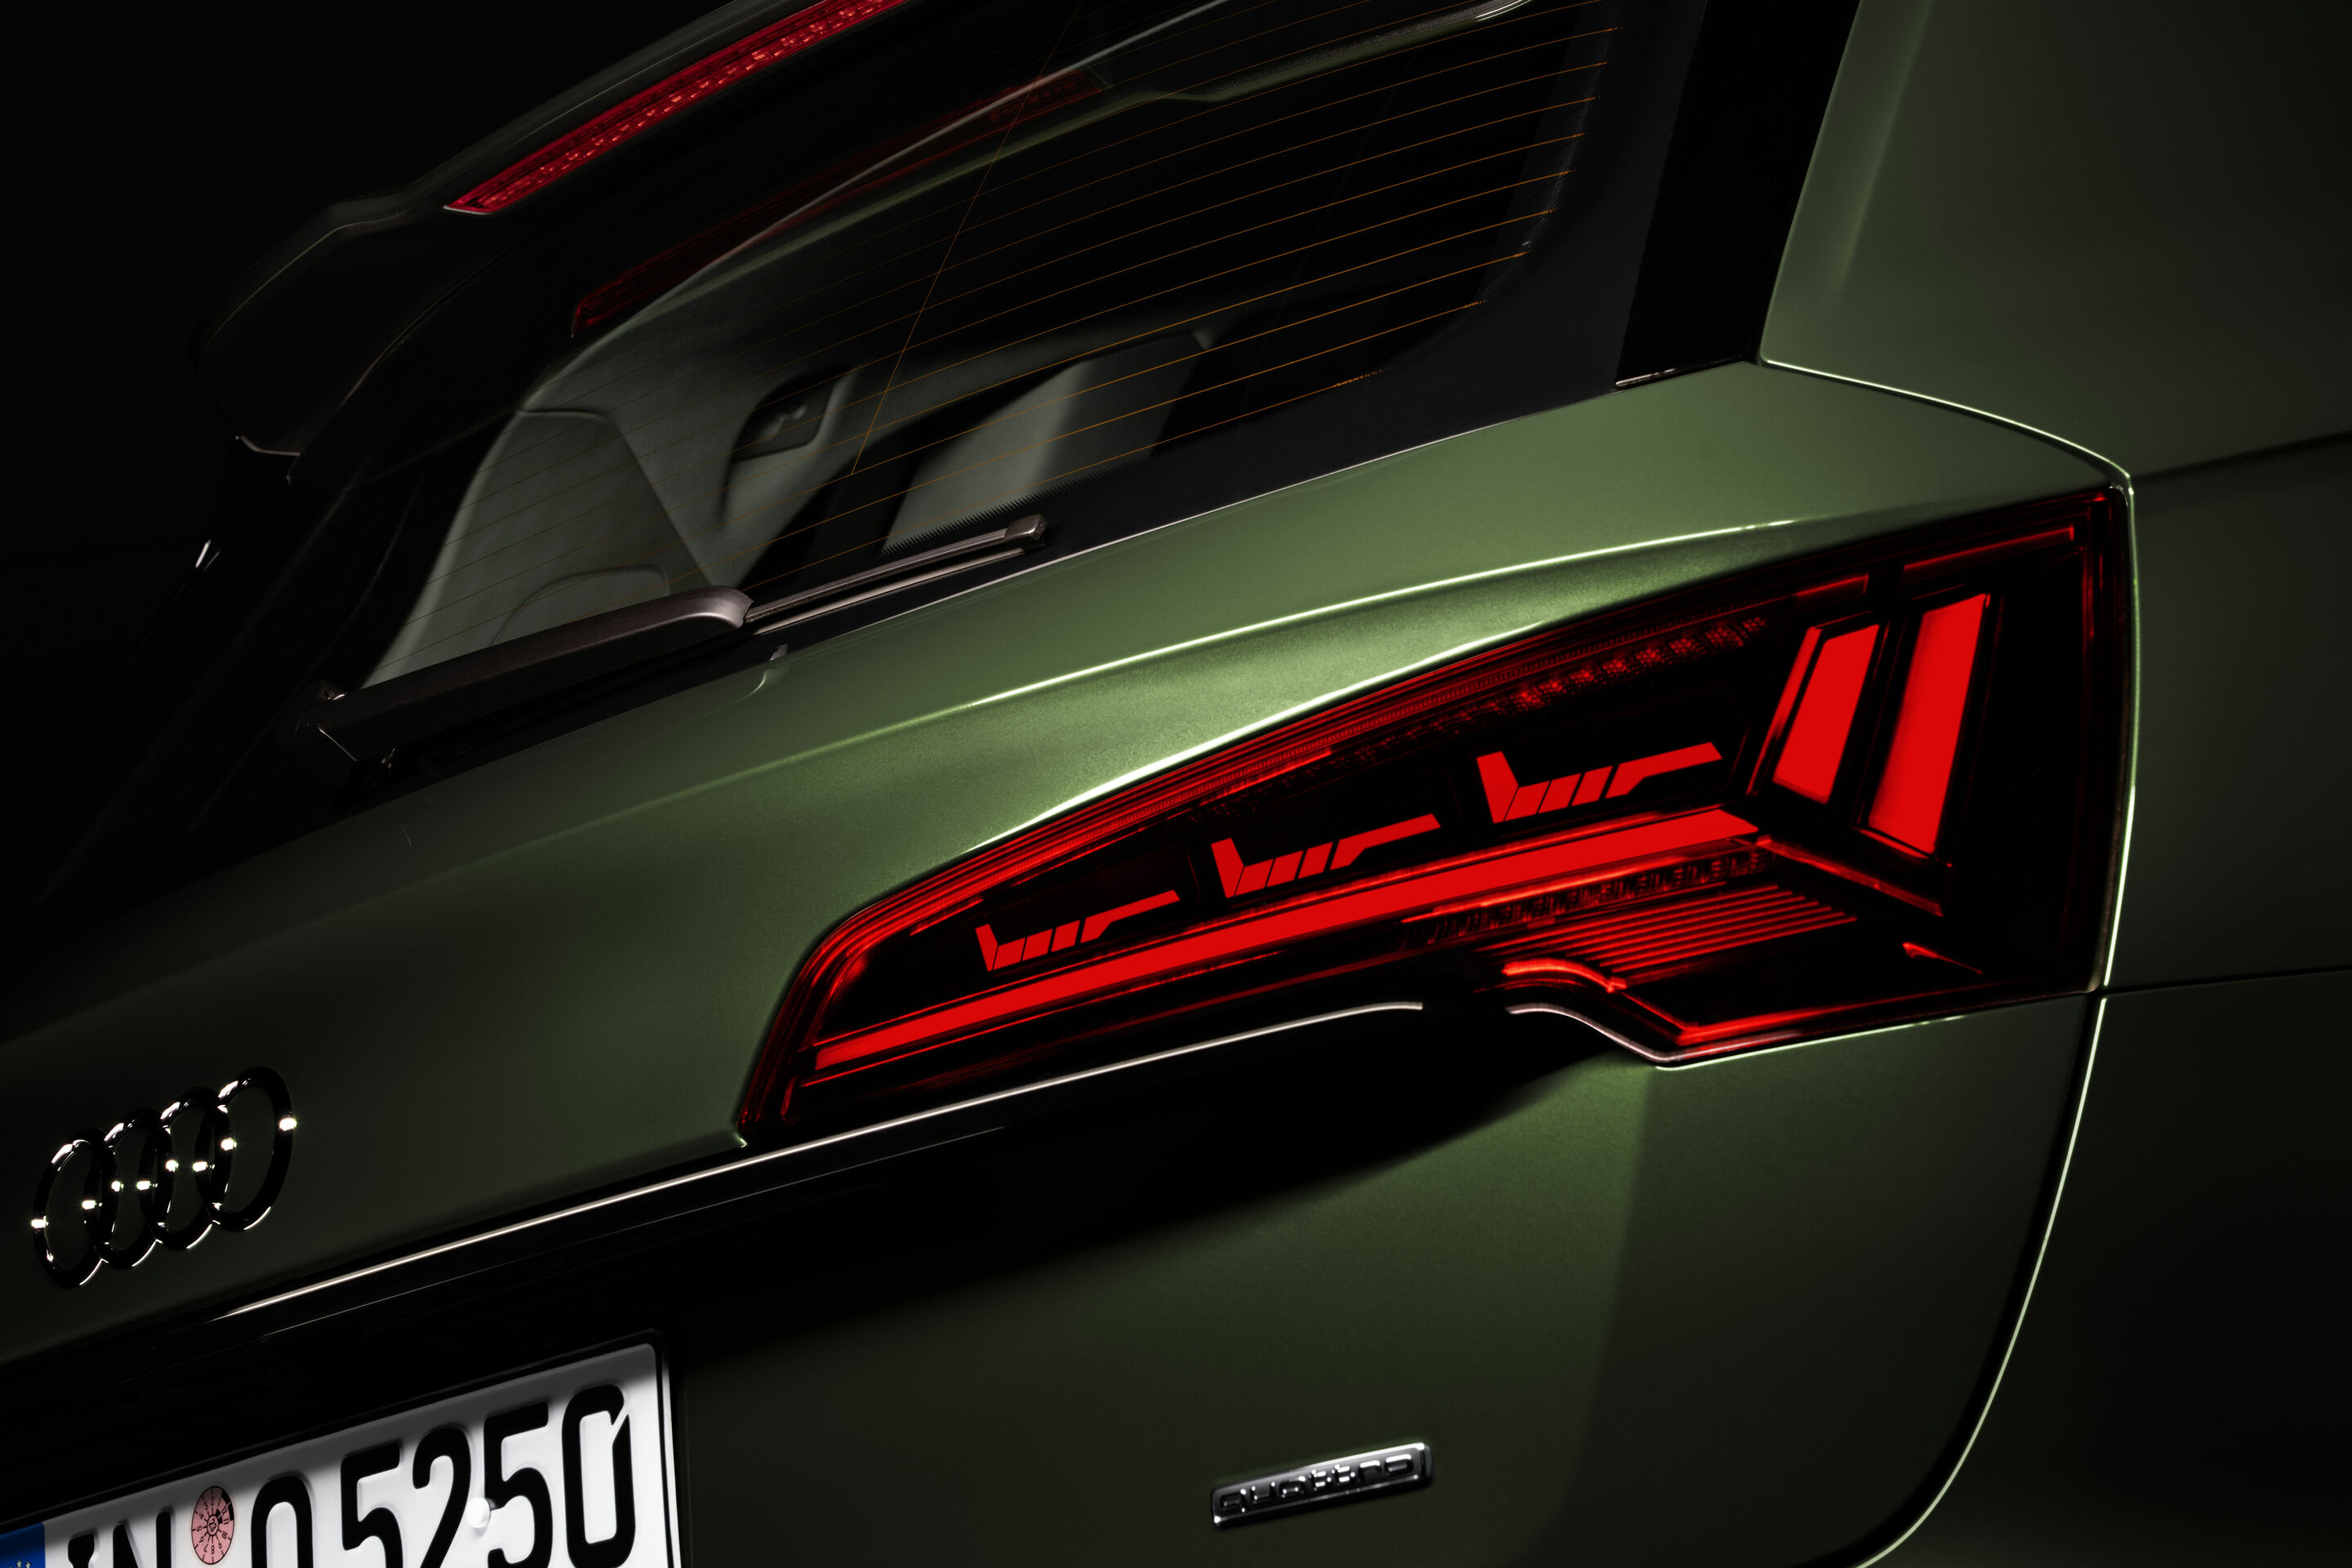 Lighting technology pioneer Audi fields next-generation OLED technology